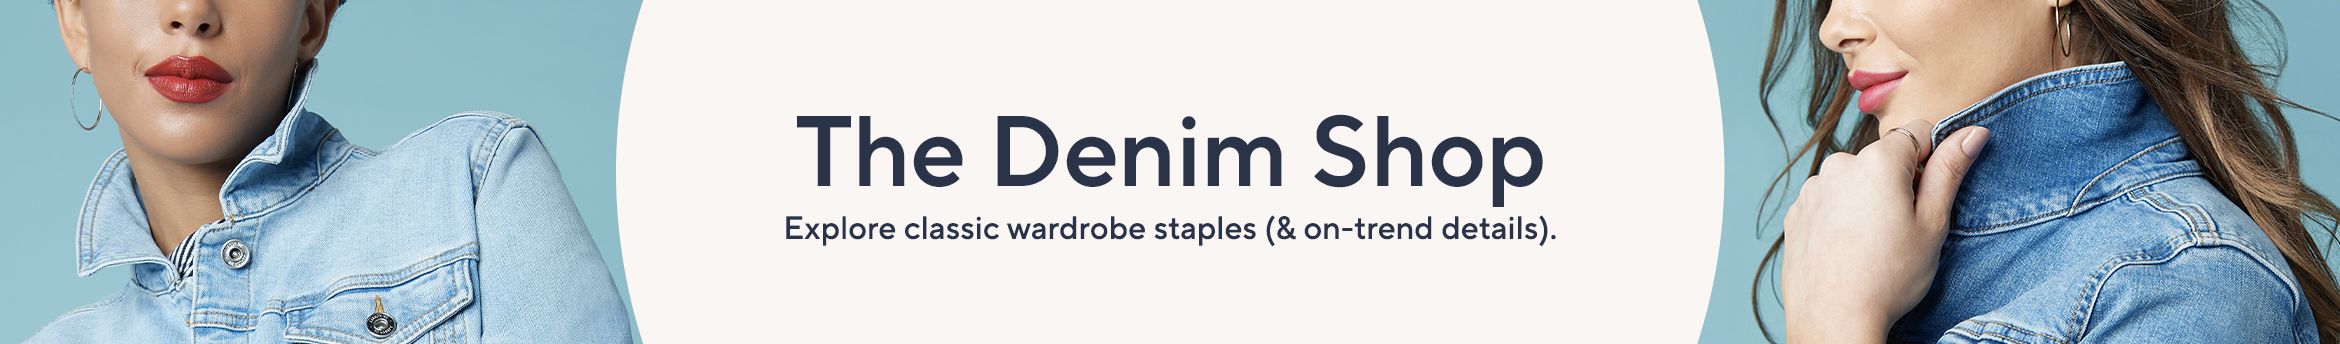 The Denim Shop. Explore classic wardrobe staples (& on-trend details).